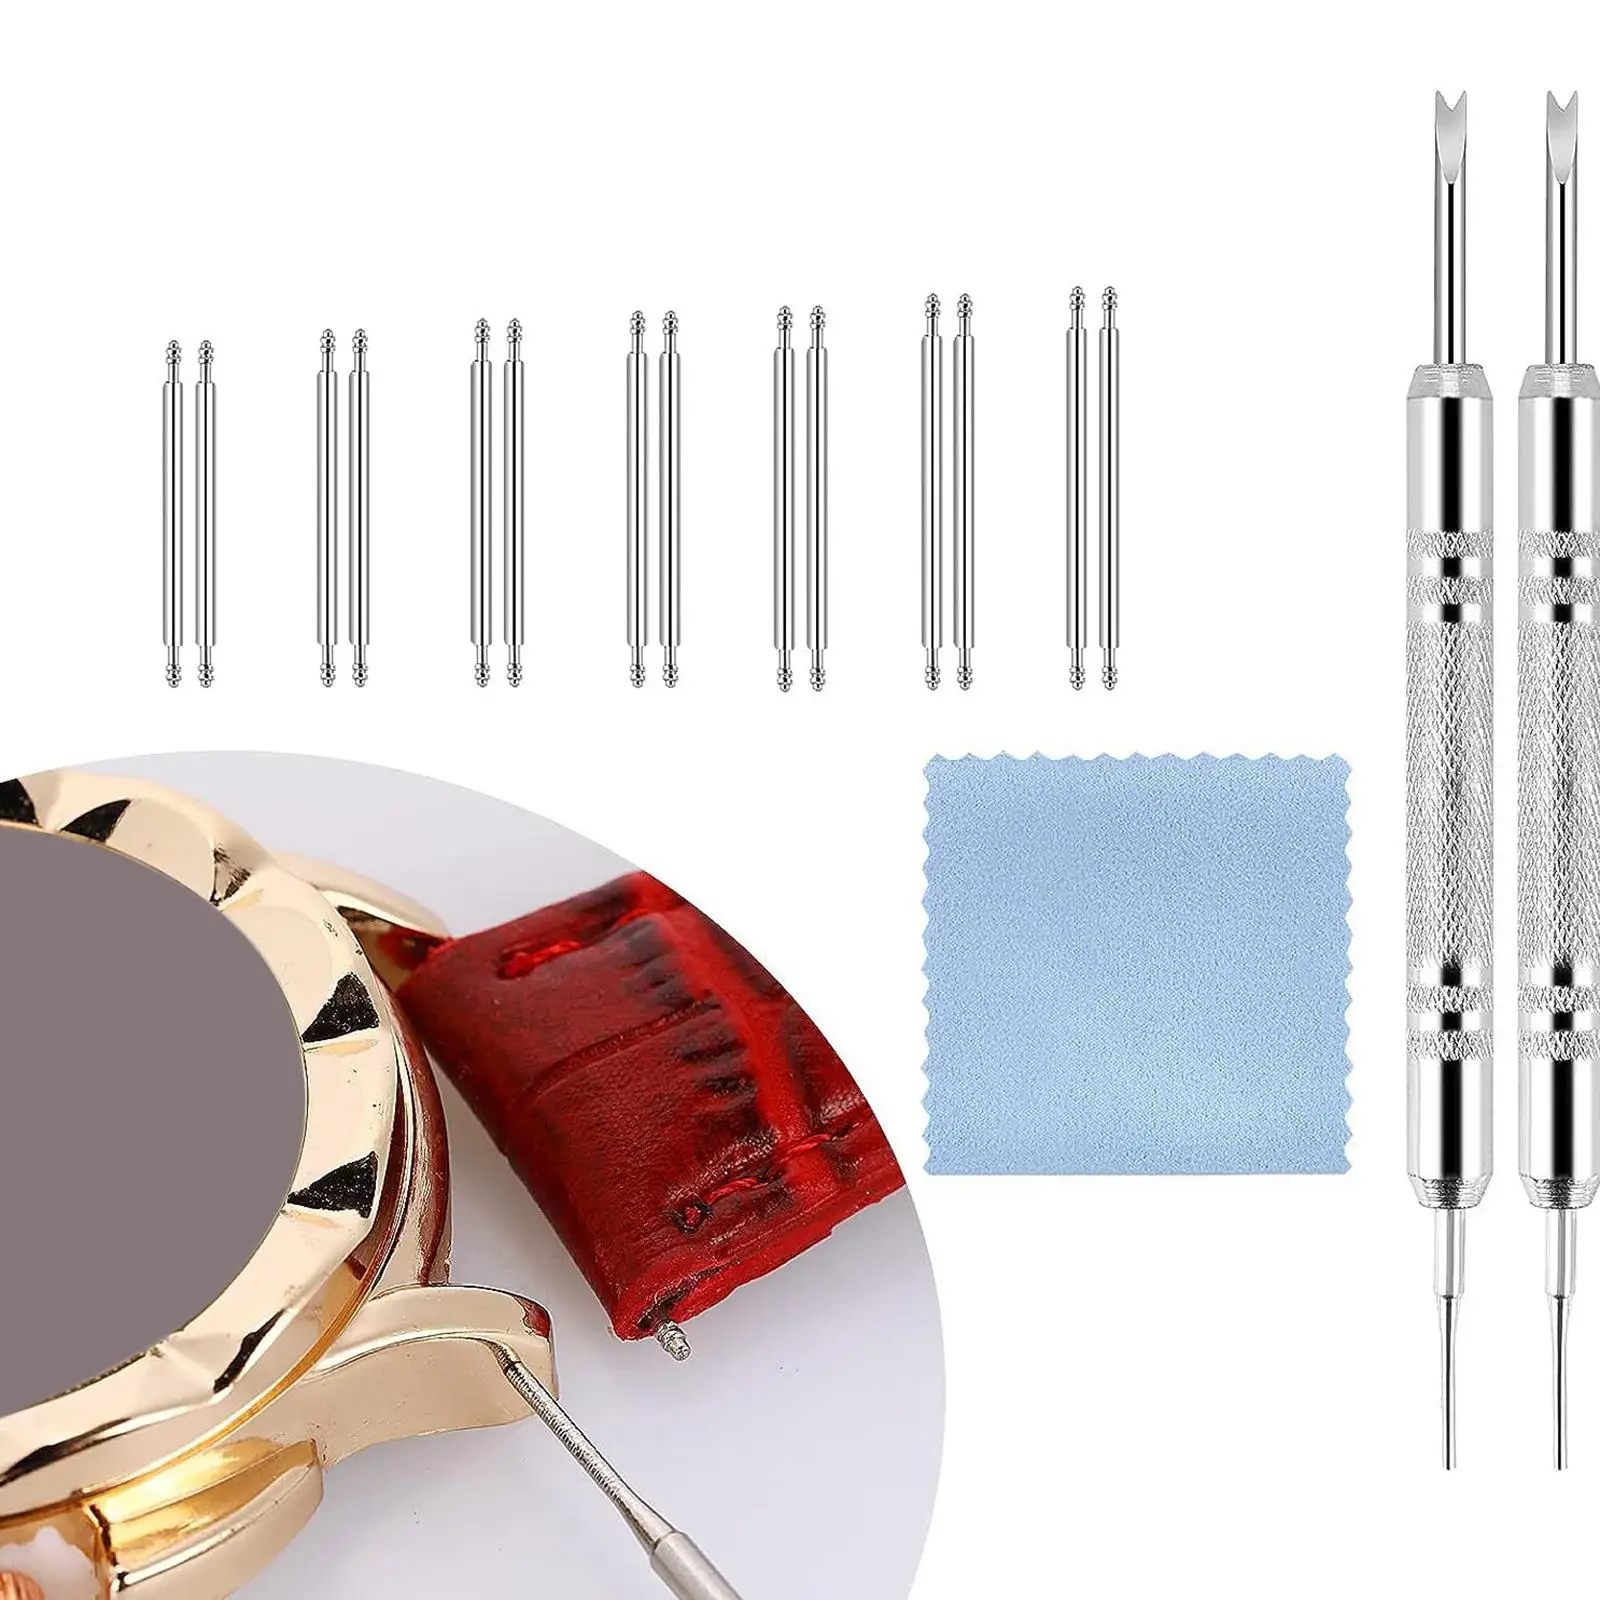 Watch Link Remover Kit Resizing Repair Tool 18-25mm Diameter 1.5mm Watch Band Repair Kit Watch Band Pins Spring Bar Tool